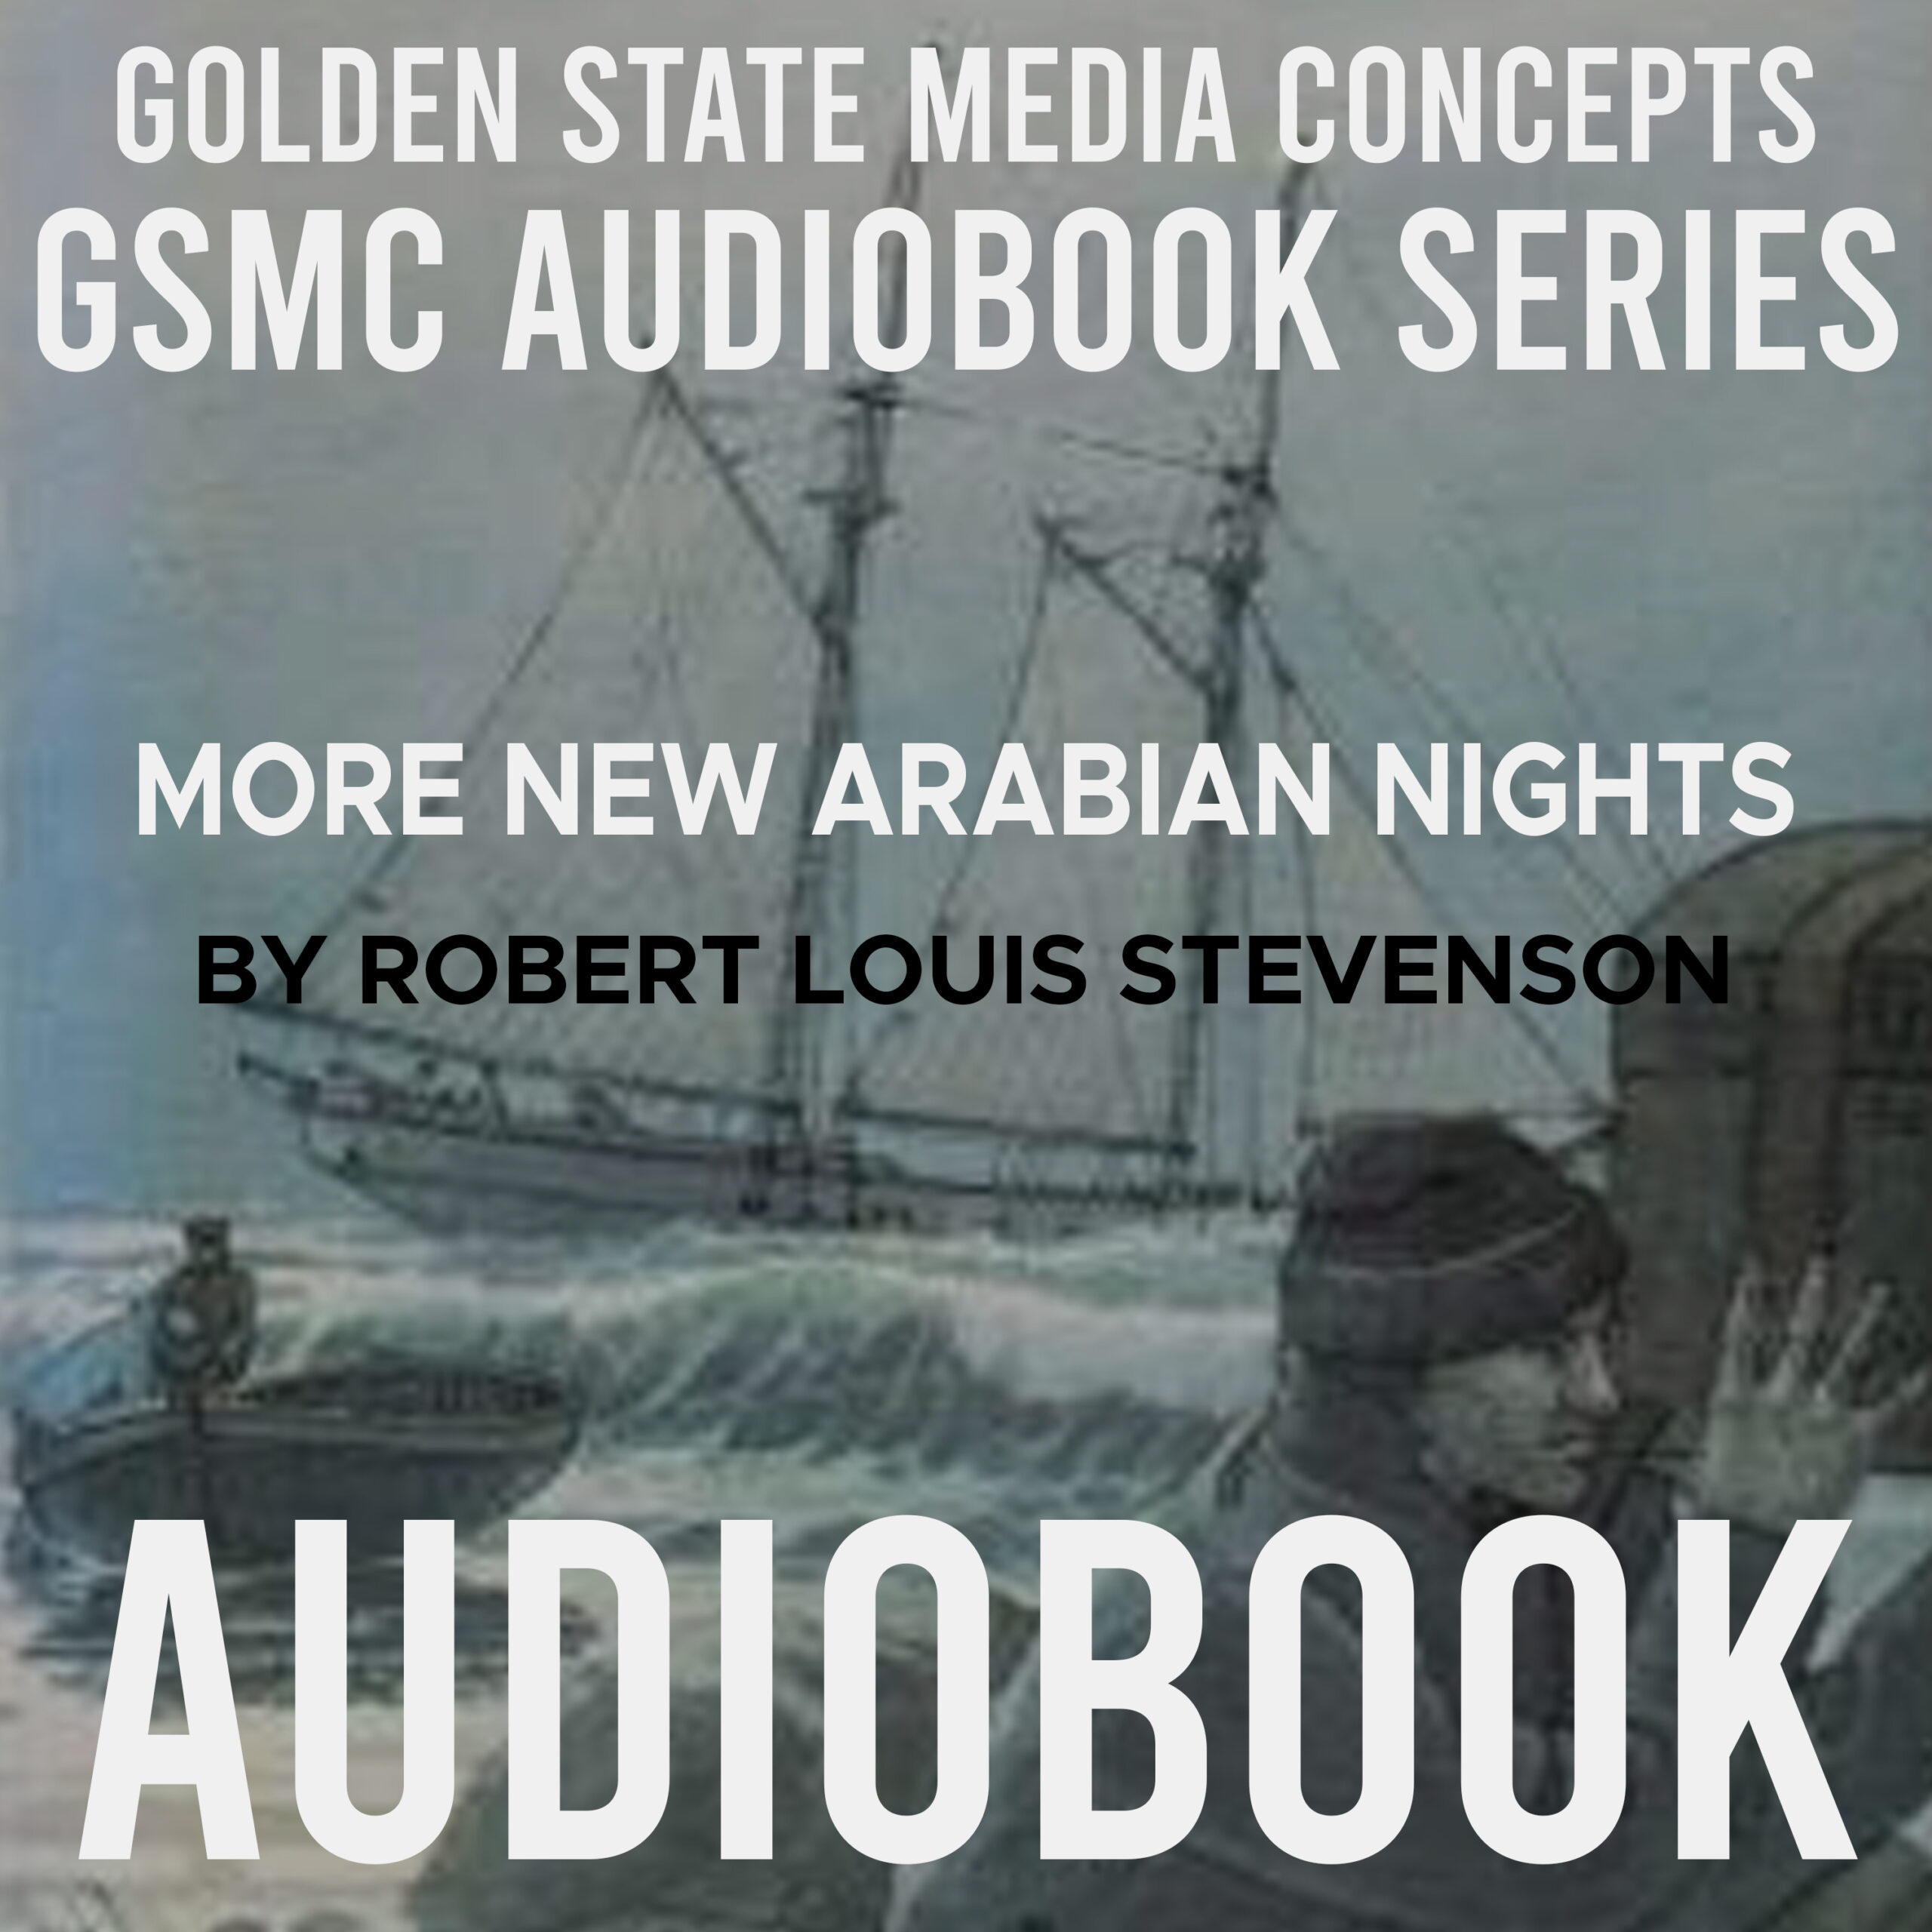 GSMC Audiobook Series: More New Arabian Nights by Robert Louis Stevenson